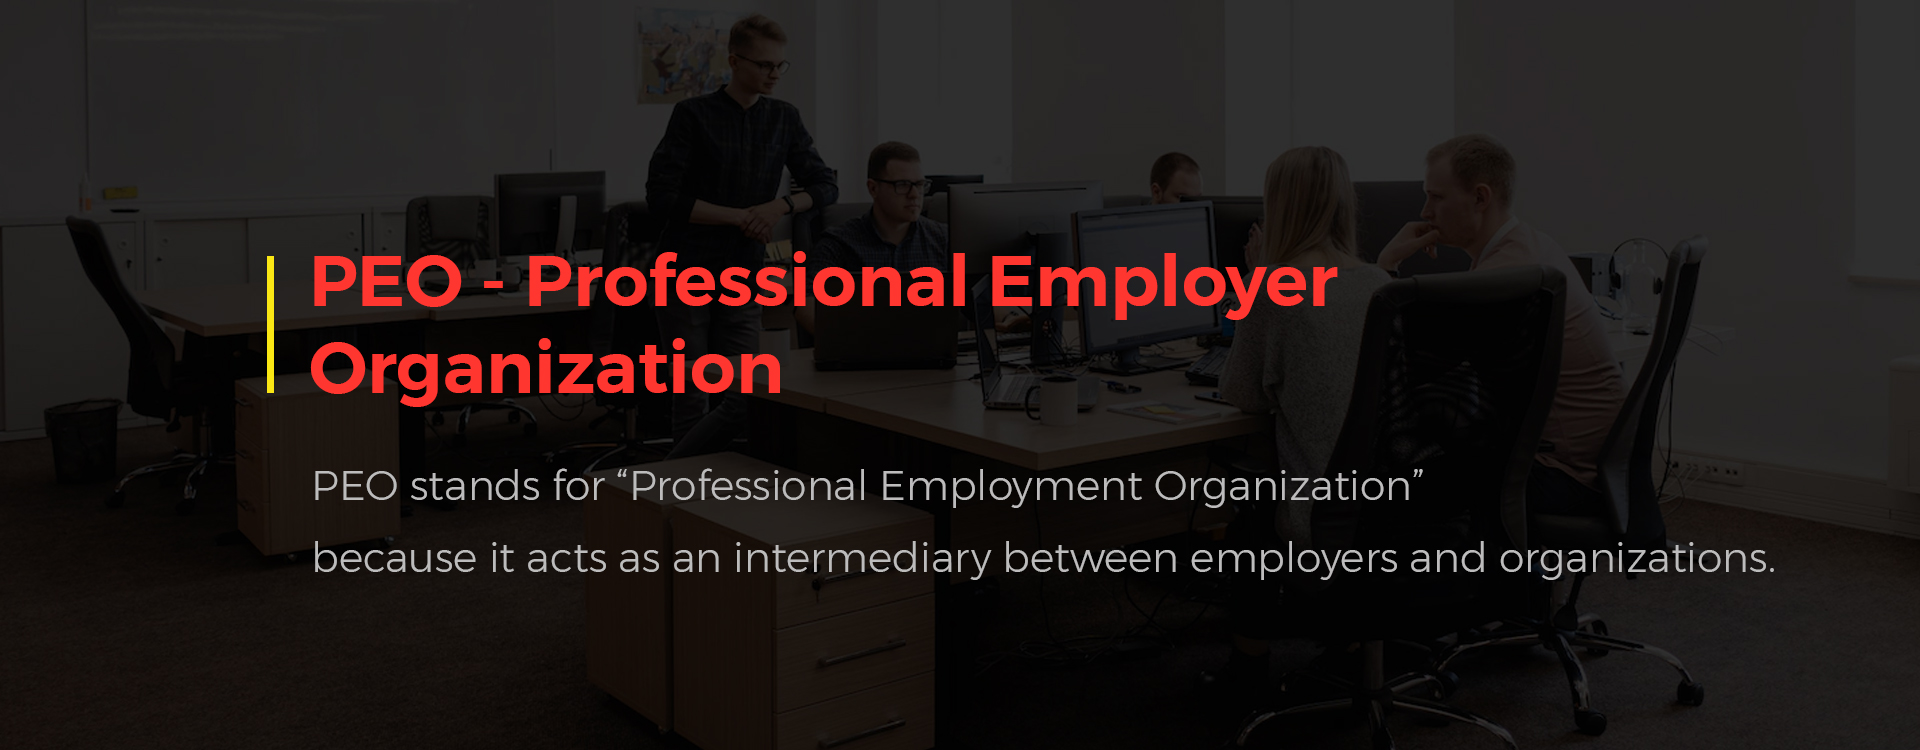 professional-employer-organization-peo-definition